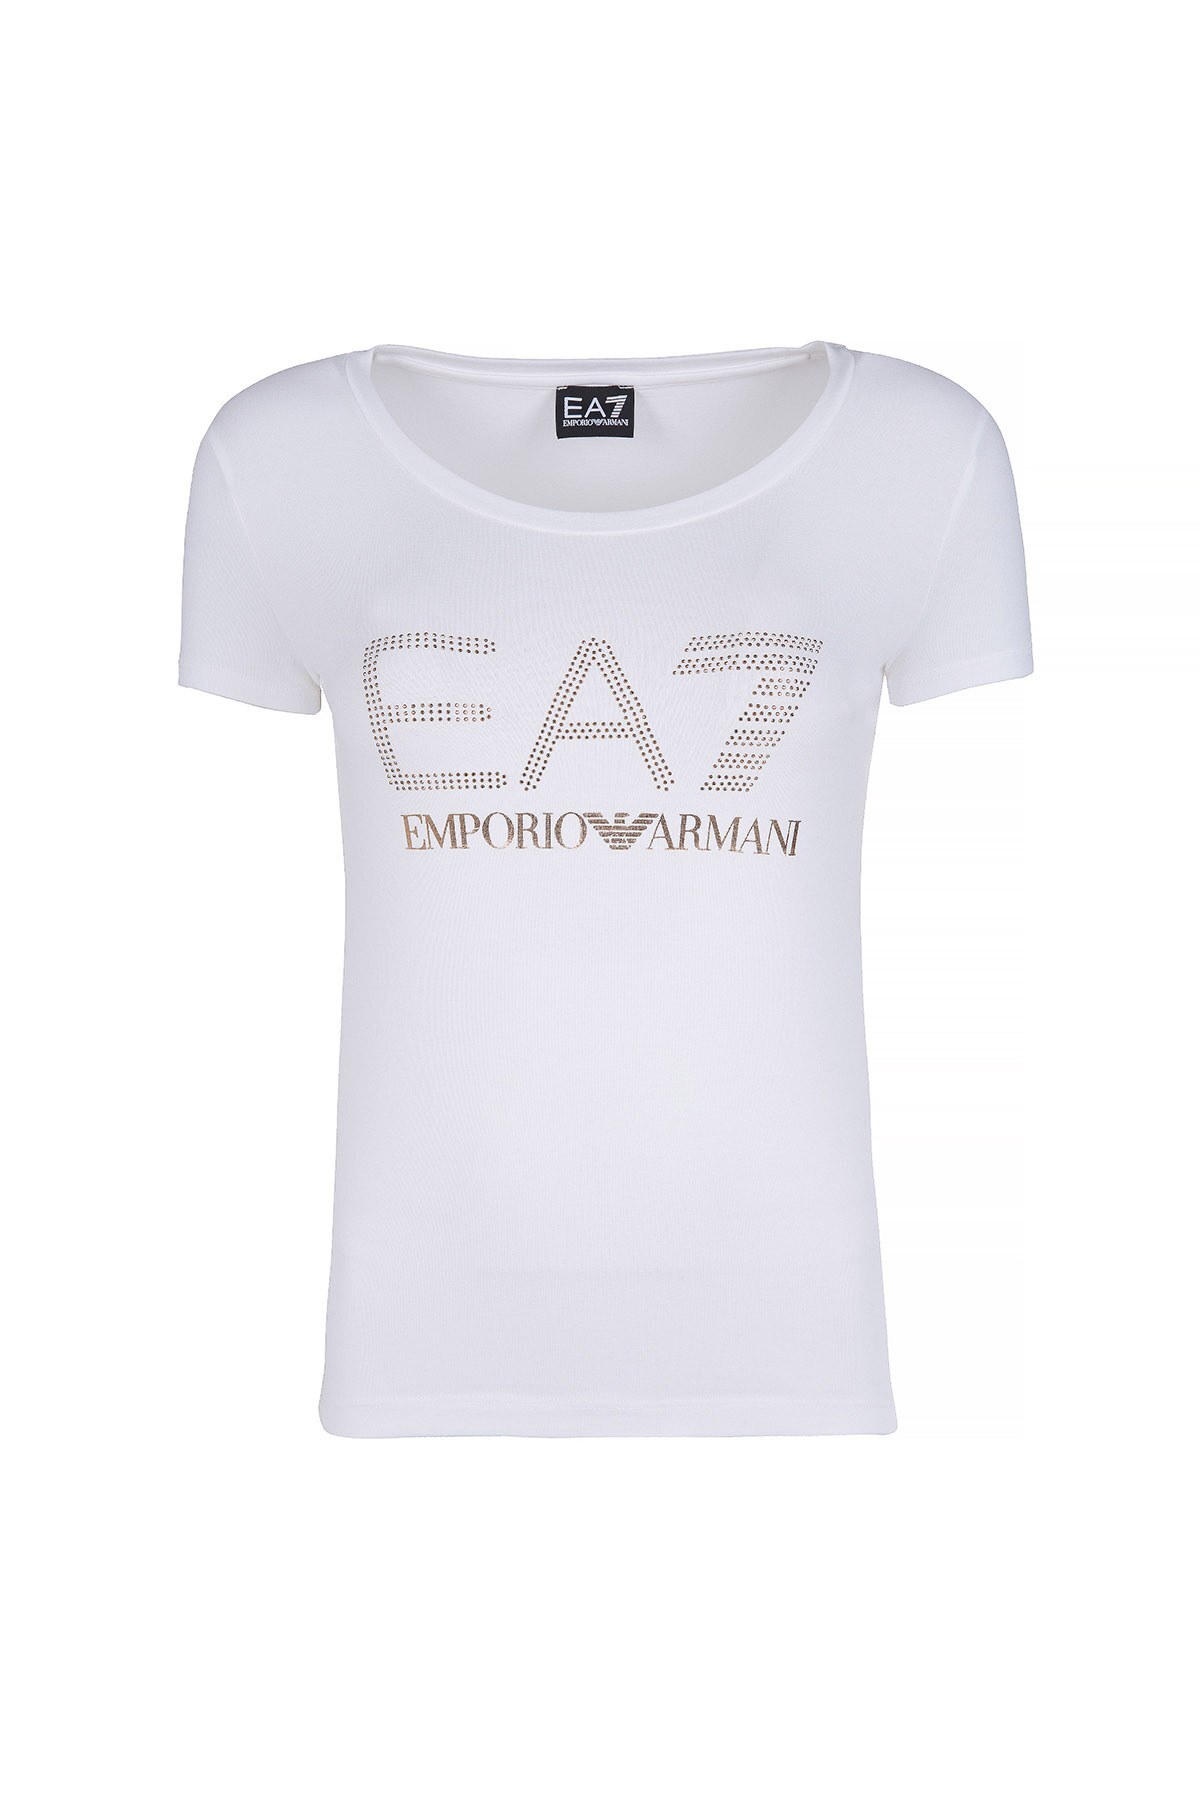 EA7 T SHIRT Kadın T Shirt 6YTT37 TJ12Z 1100 BEYAZ